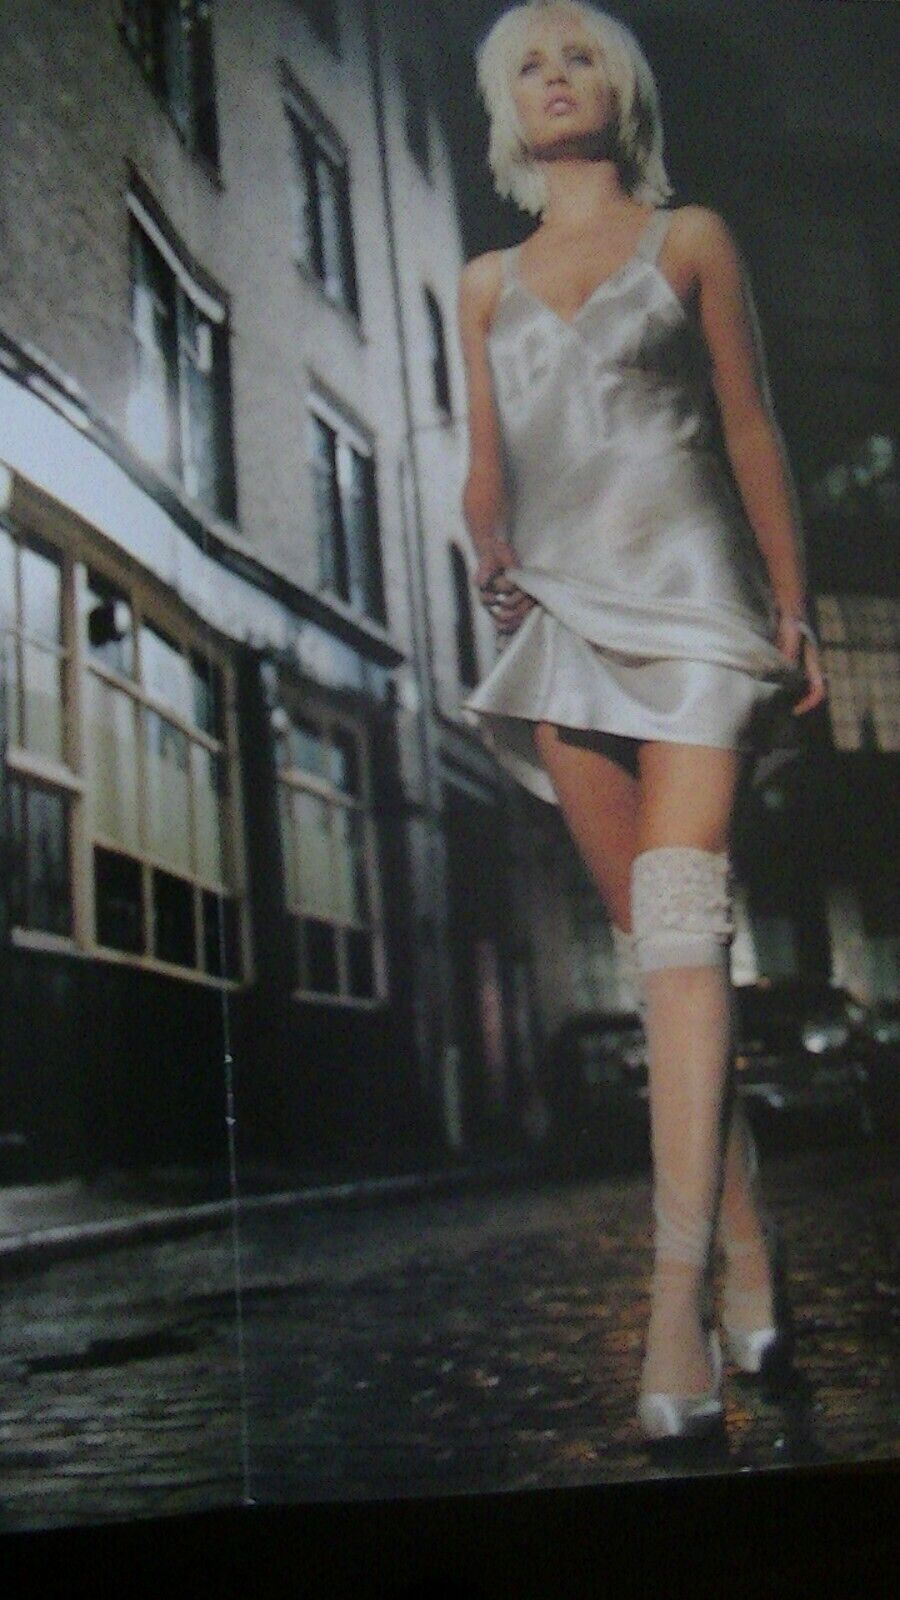 Transvision Vamp - Velveteen UK Tour 1989 - Souvenir Booklet - Wendy James